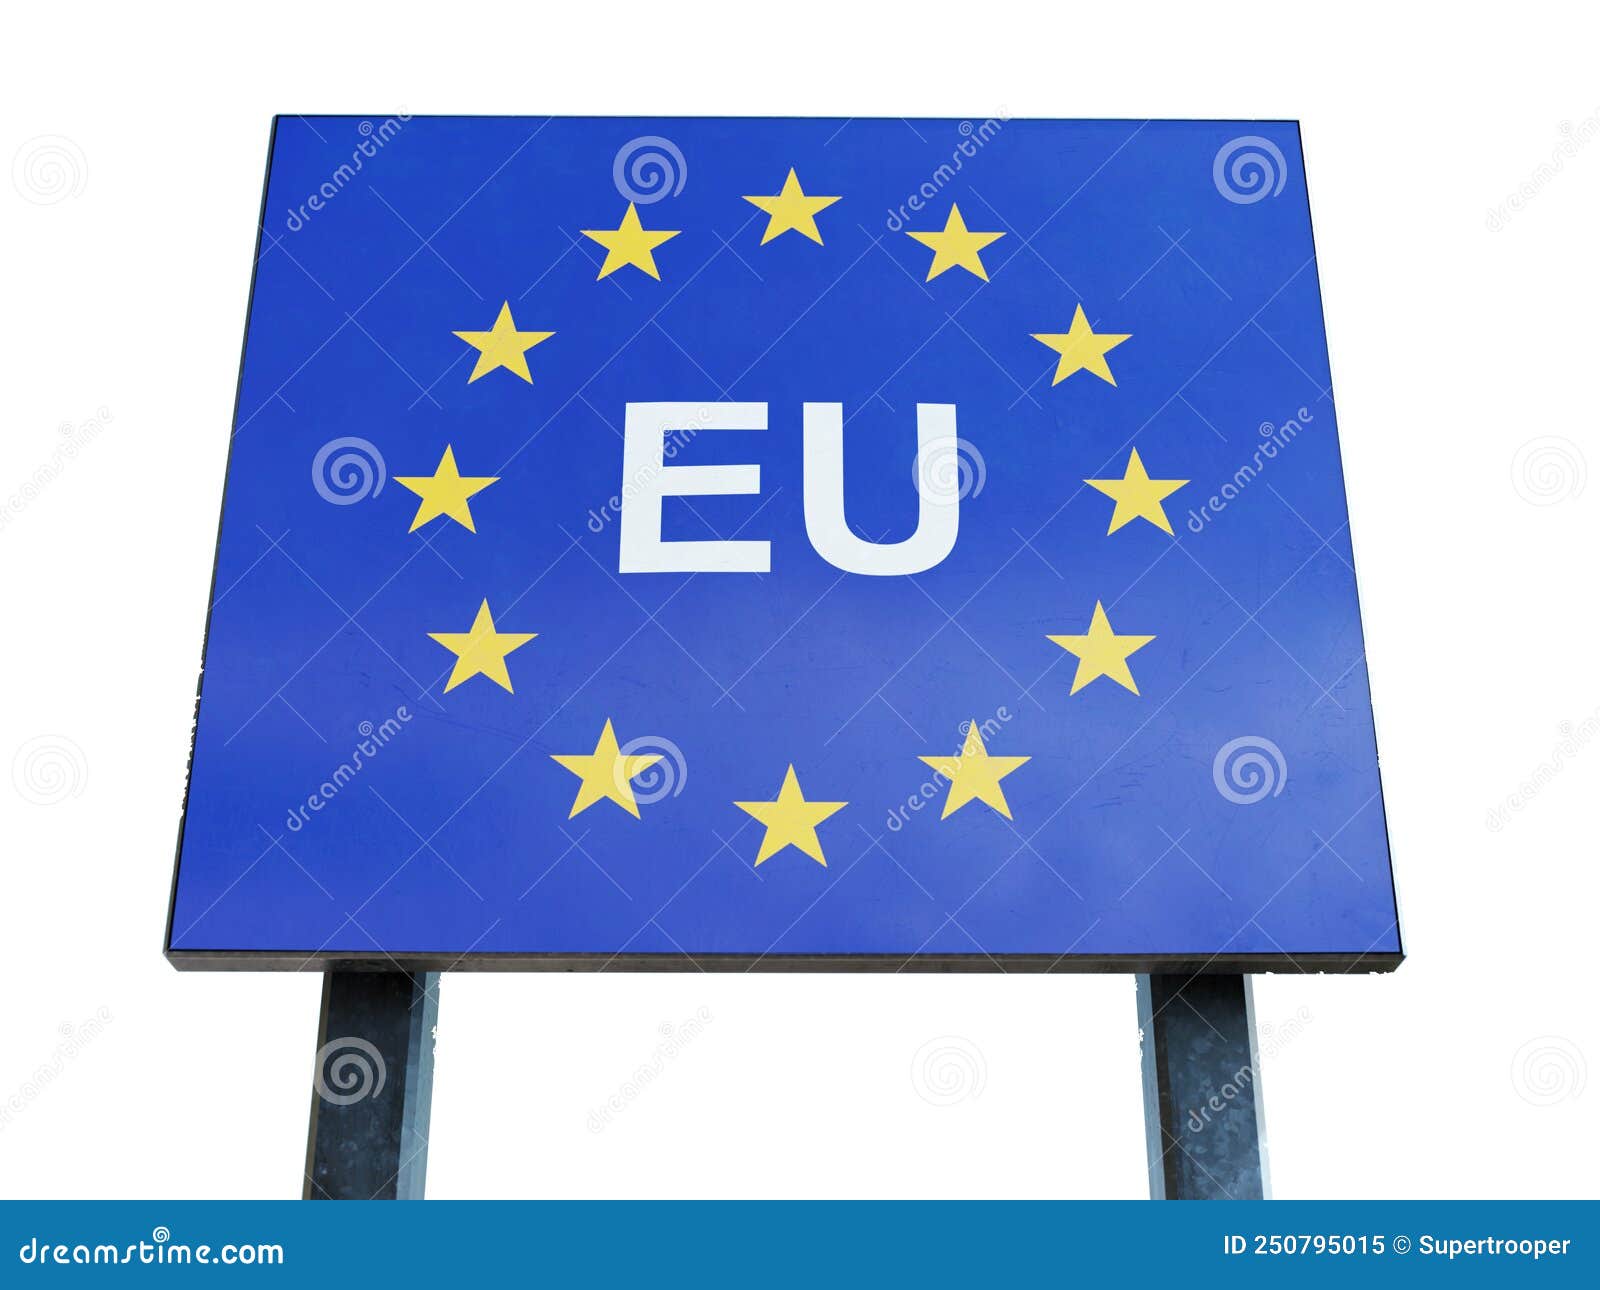 border sign of europeÃÂ european union flag and eu border